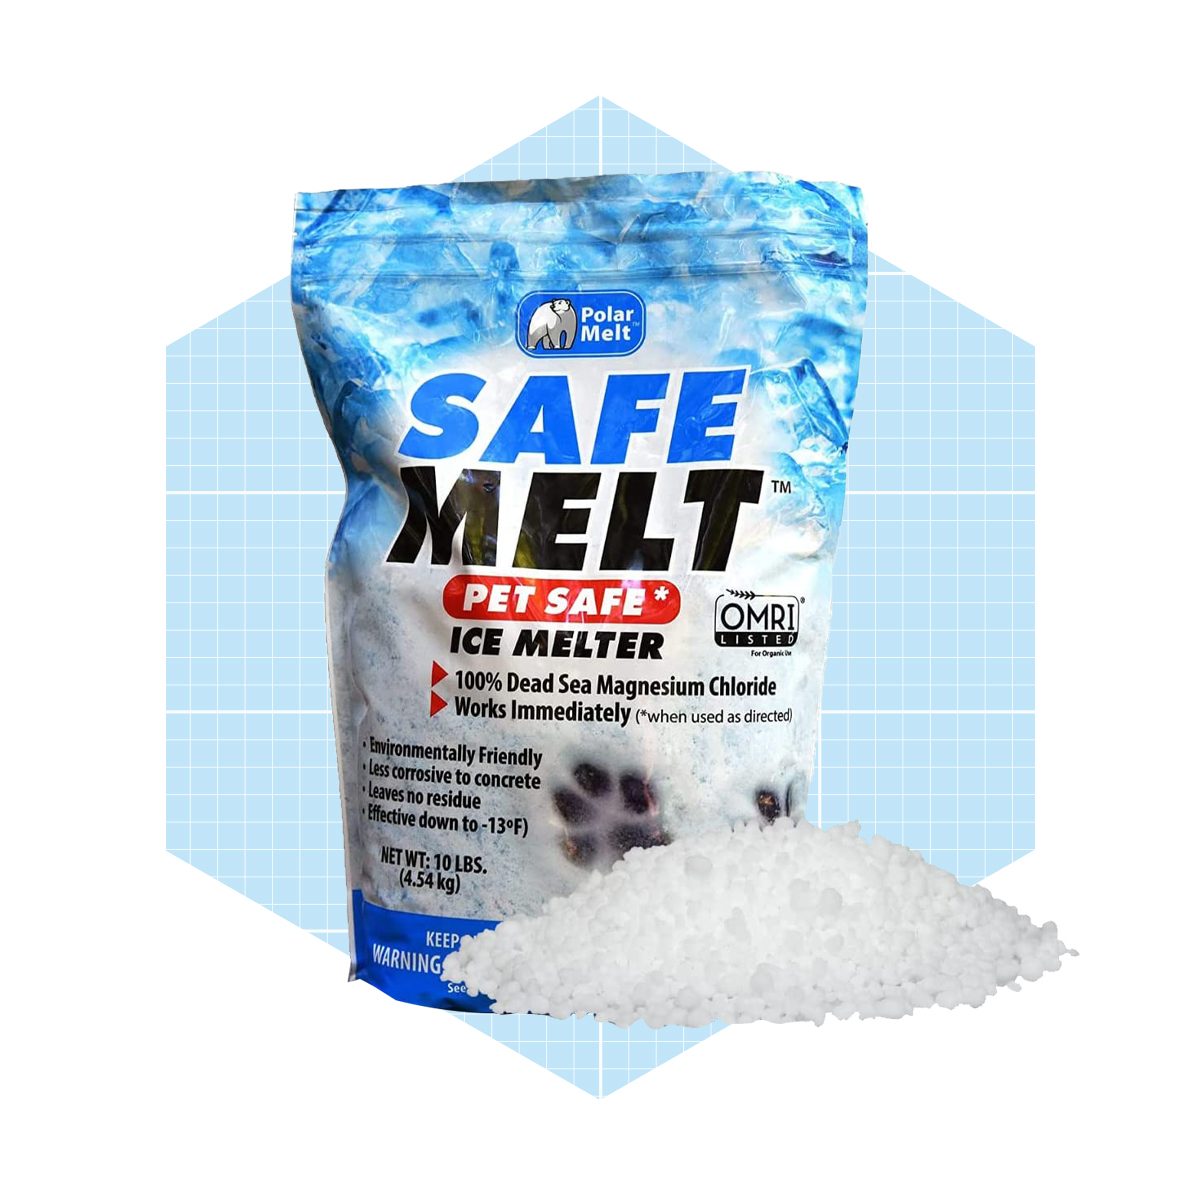 Harris Kind Melt Pet Friendly Ice And Snow Melter Ecomm Amazon.com